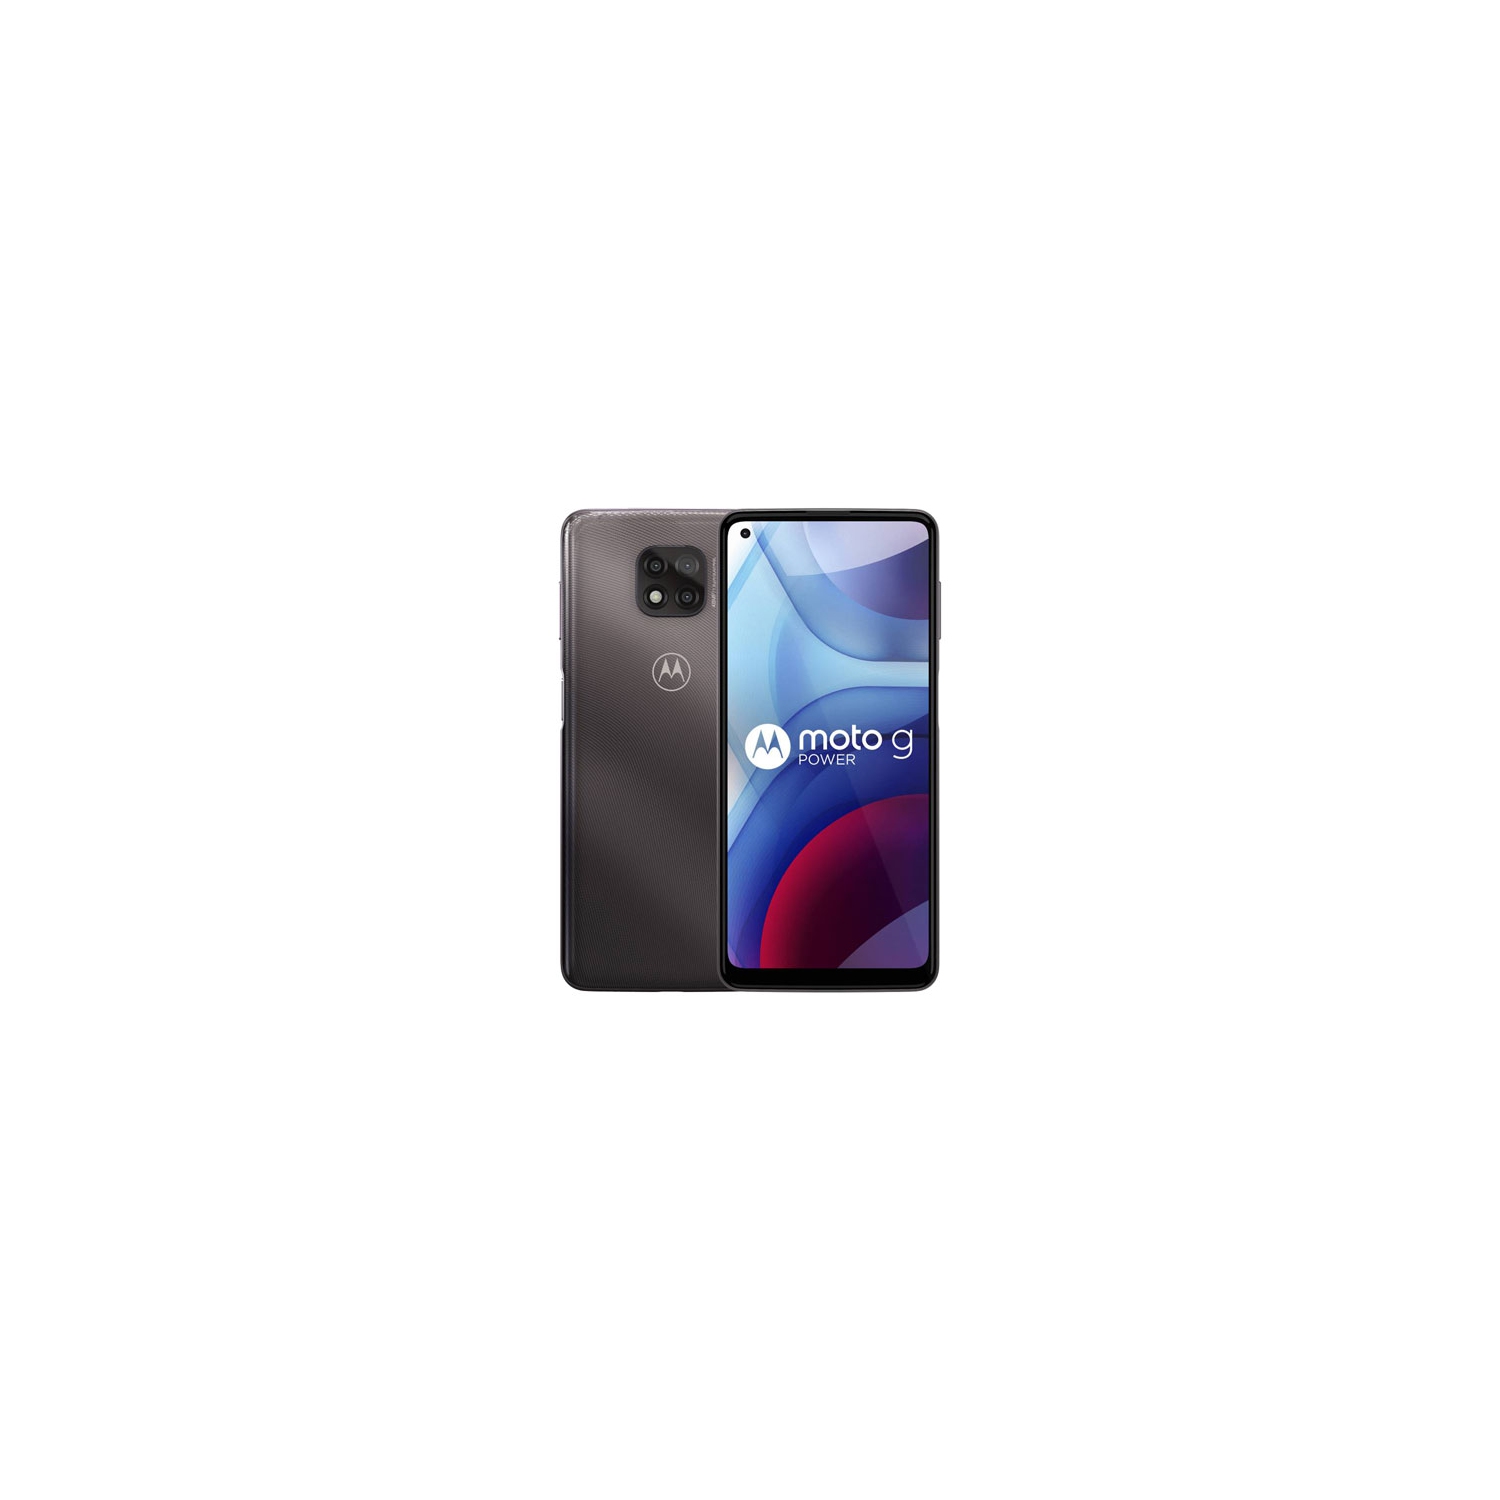 Motorola Moto G Power (2021) 64GB Smartphone - Flash Gray - Unlocked - New